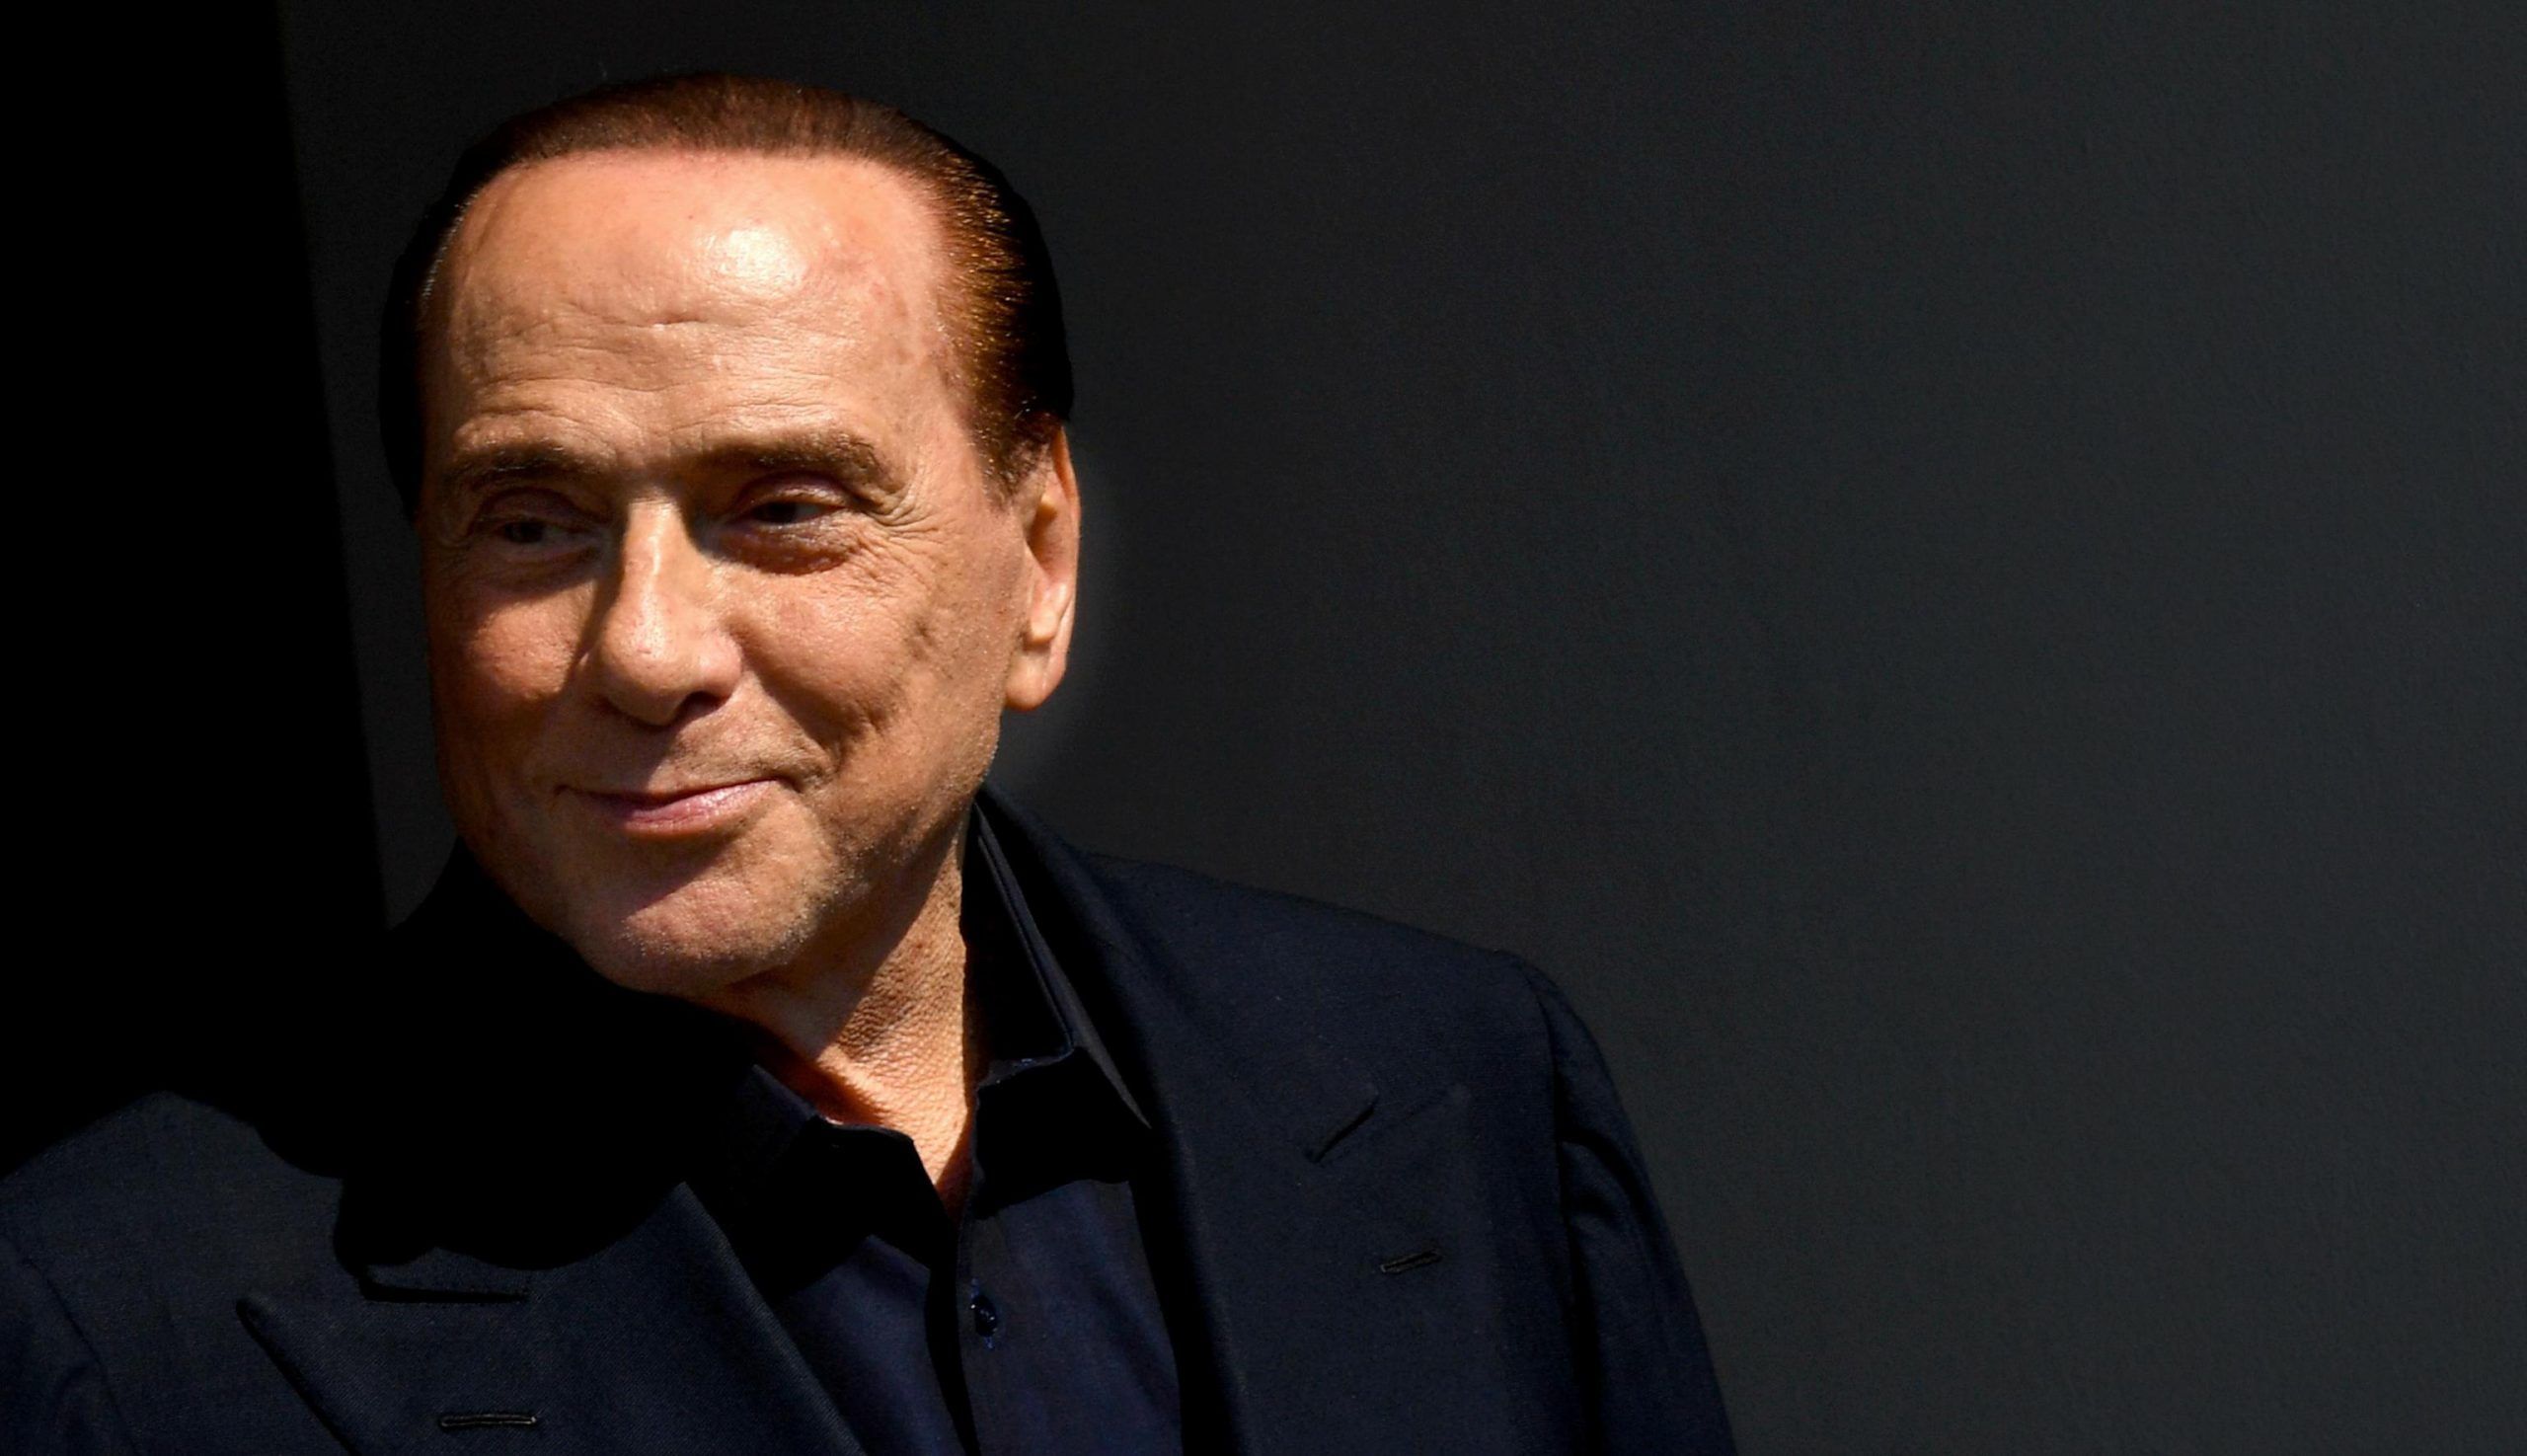 Berlusconi lascia ospedale San Raffaele dopo controlli